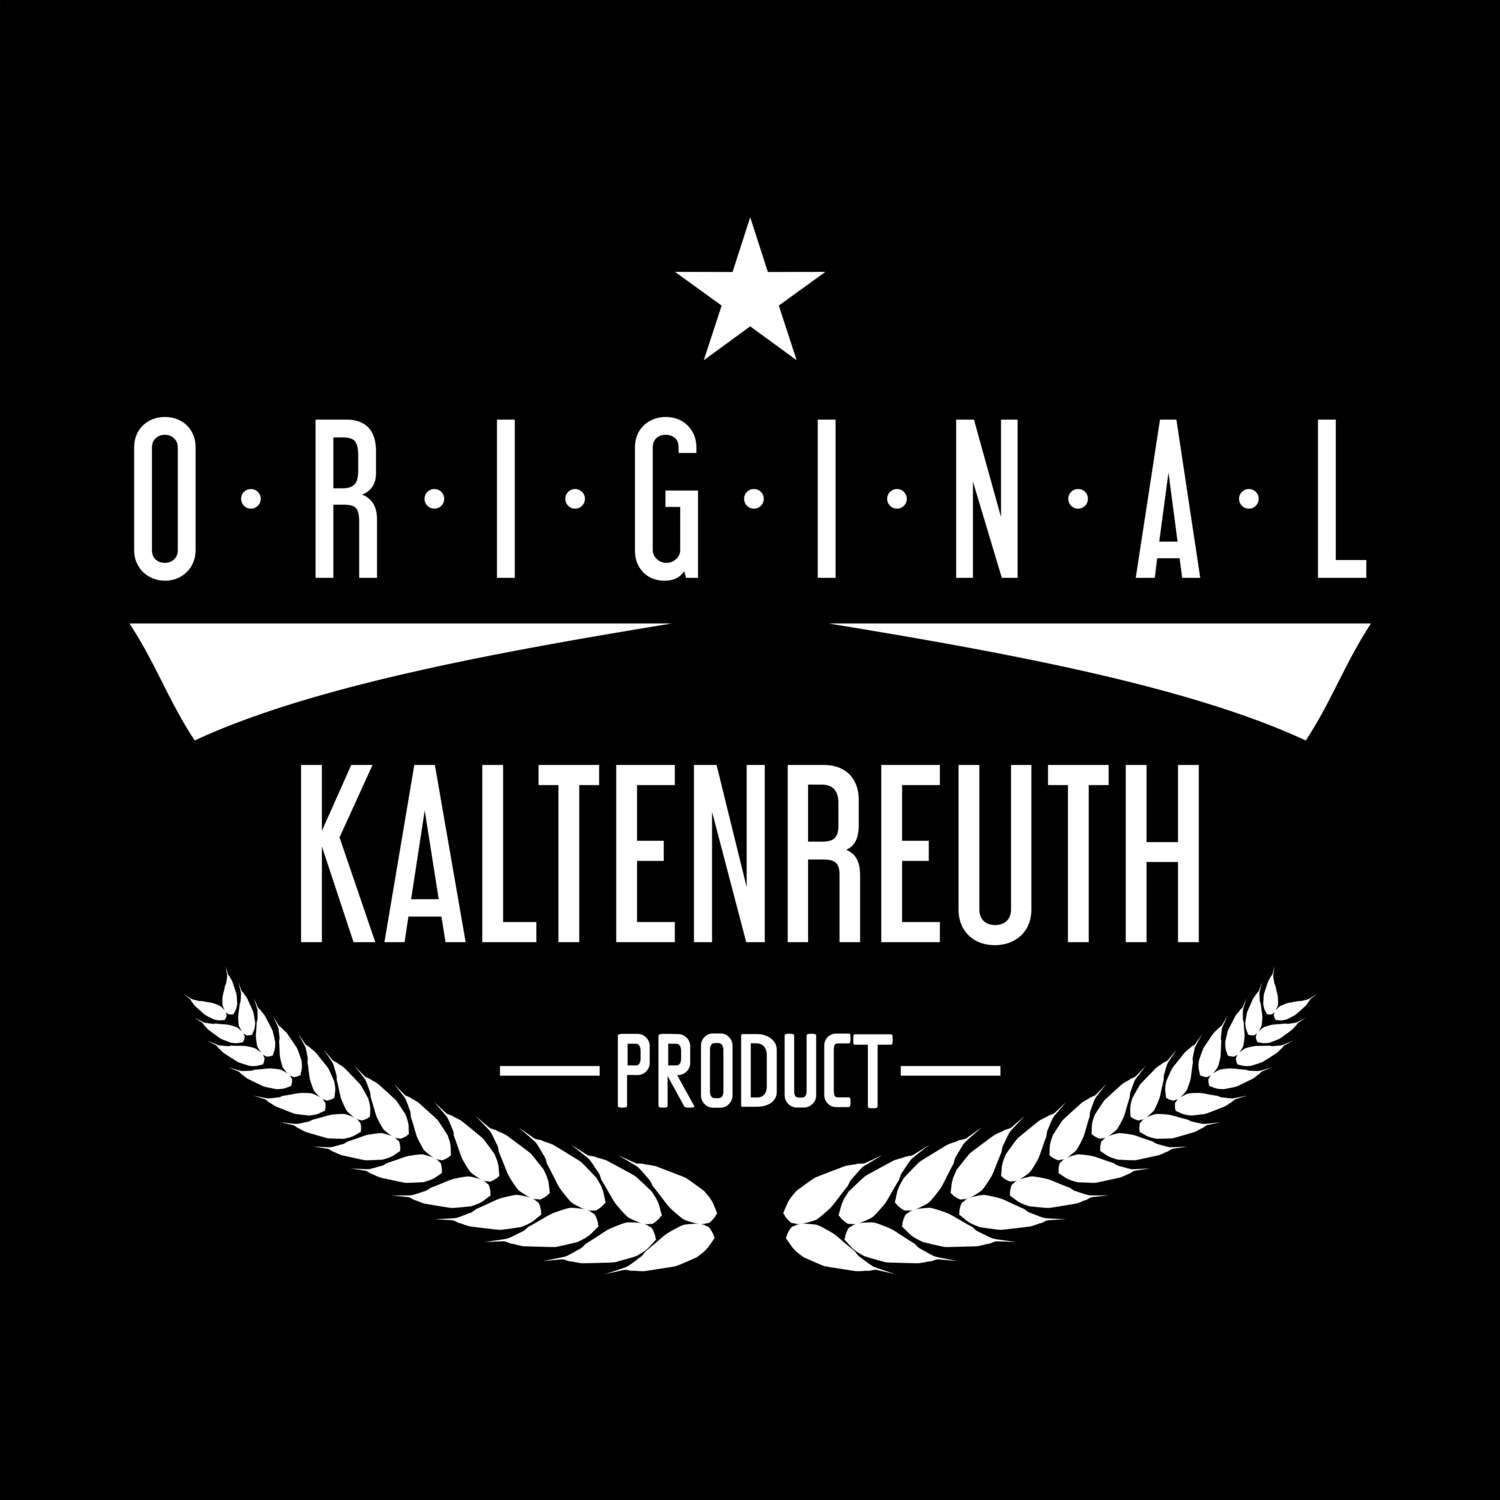 Kaltenreuth T-Shirt »Original Product«